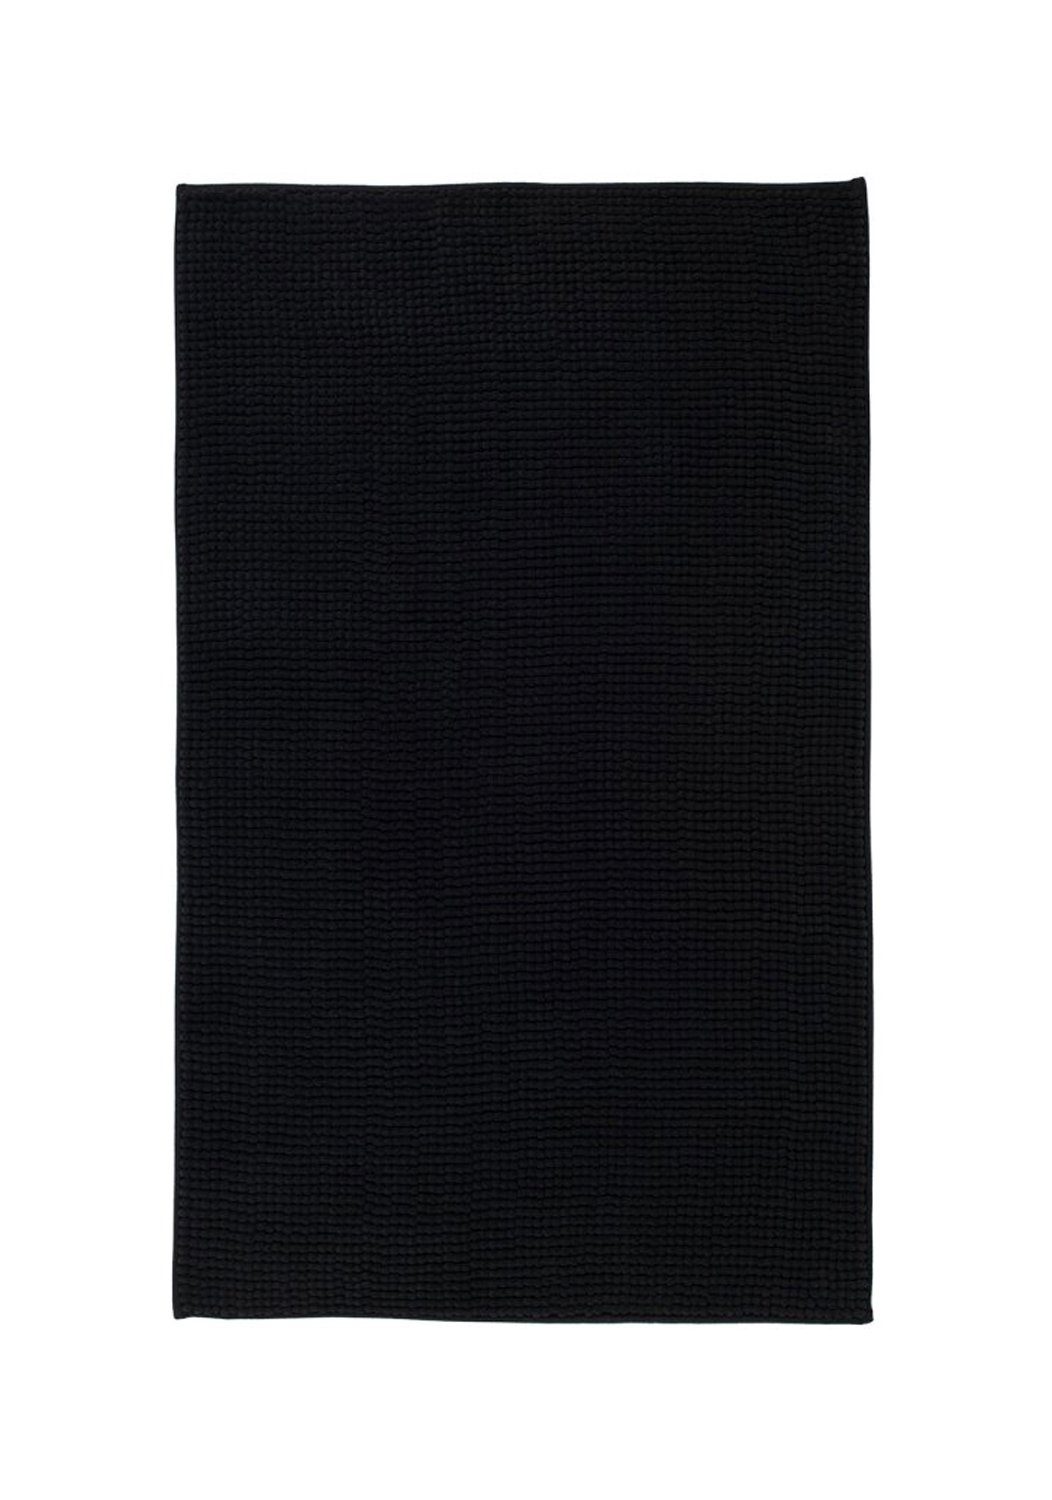 Gözze Badematte CHENILLE, Graphitfarben, 70 x 50 cm, Uni, Höhe 15.0 mm, rutschhemmend beschichtet, fußbodenheizungsgeeignet, Polyester, rechteckig